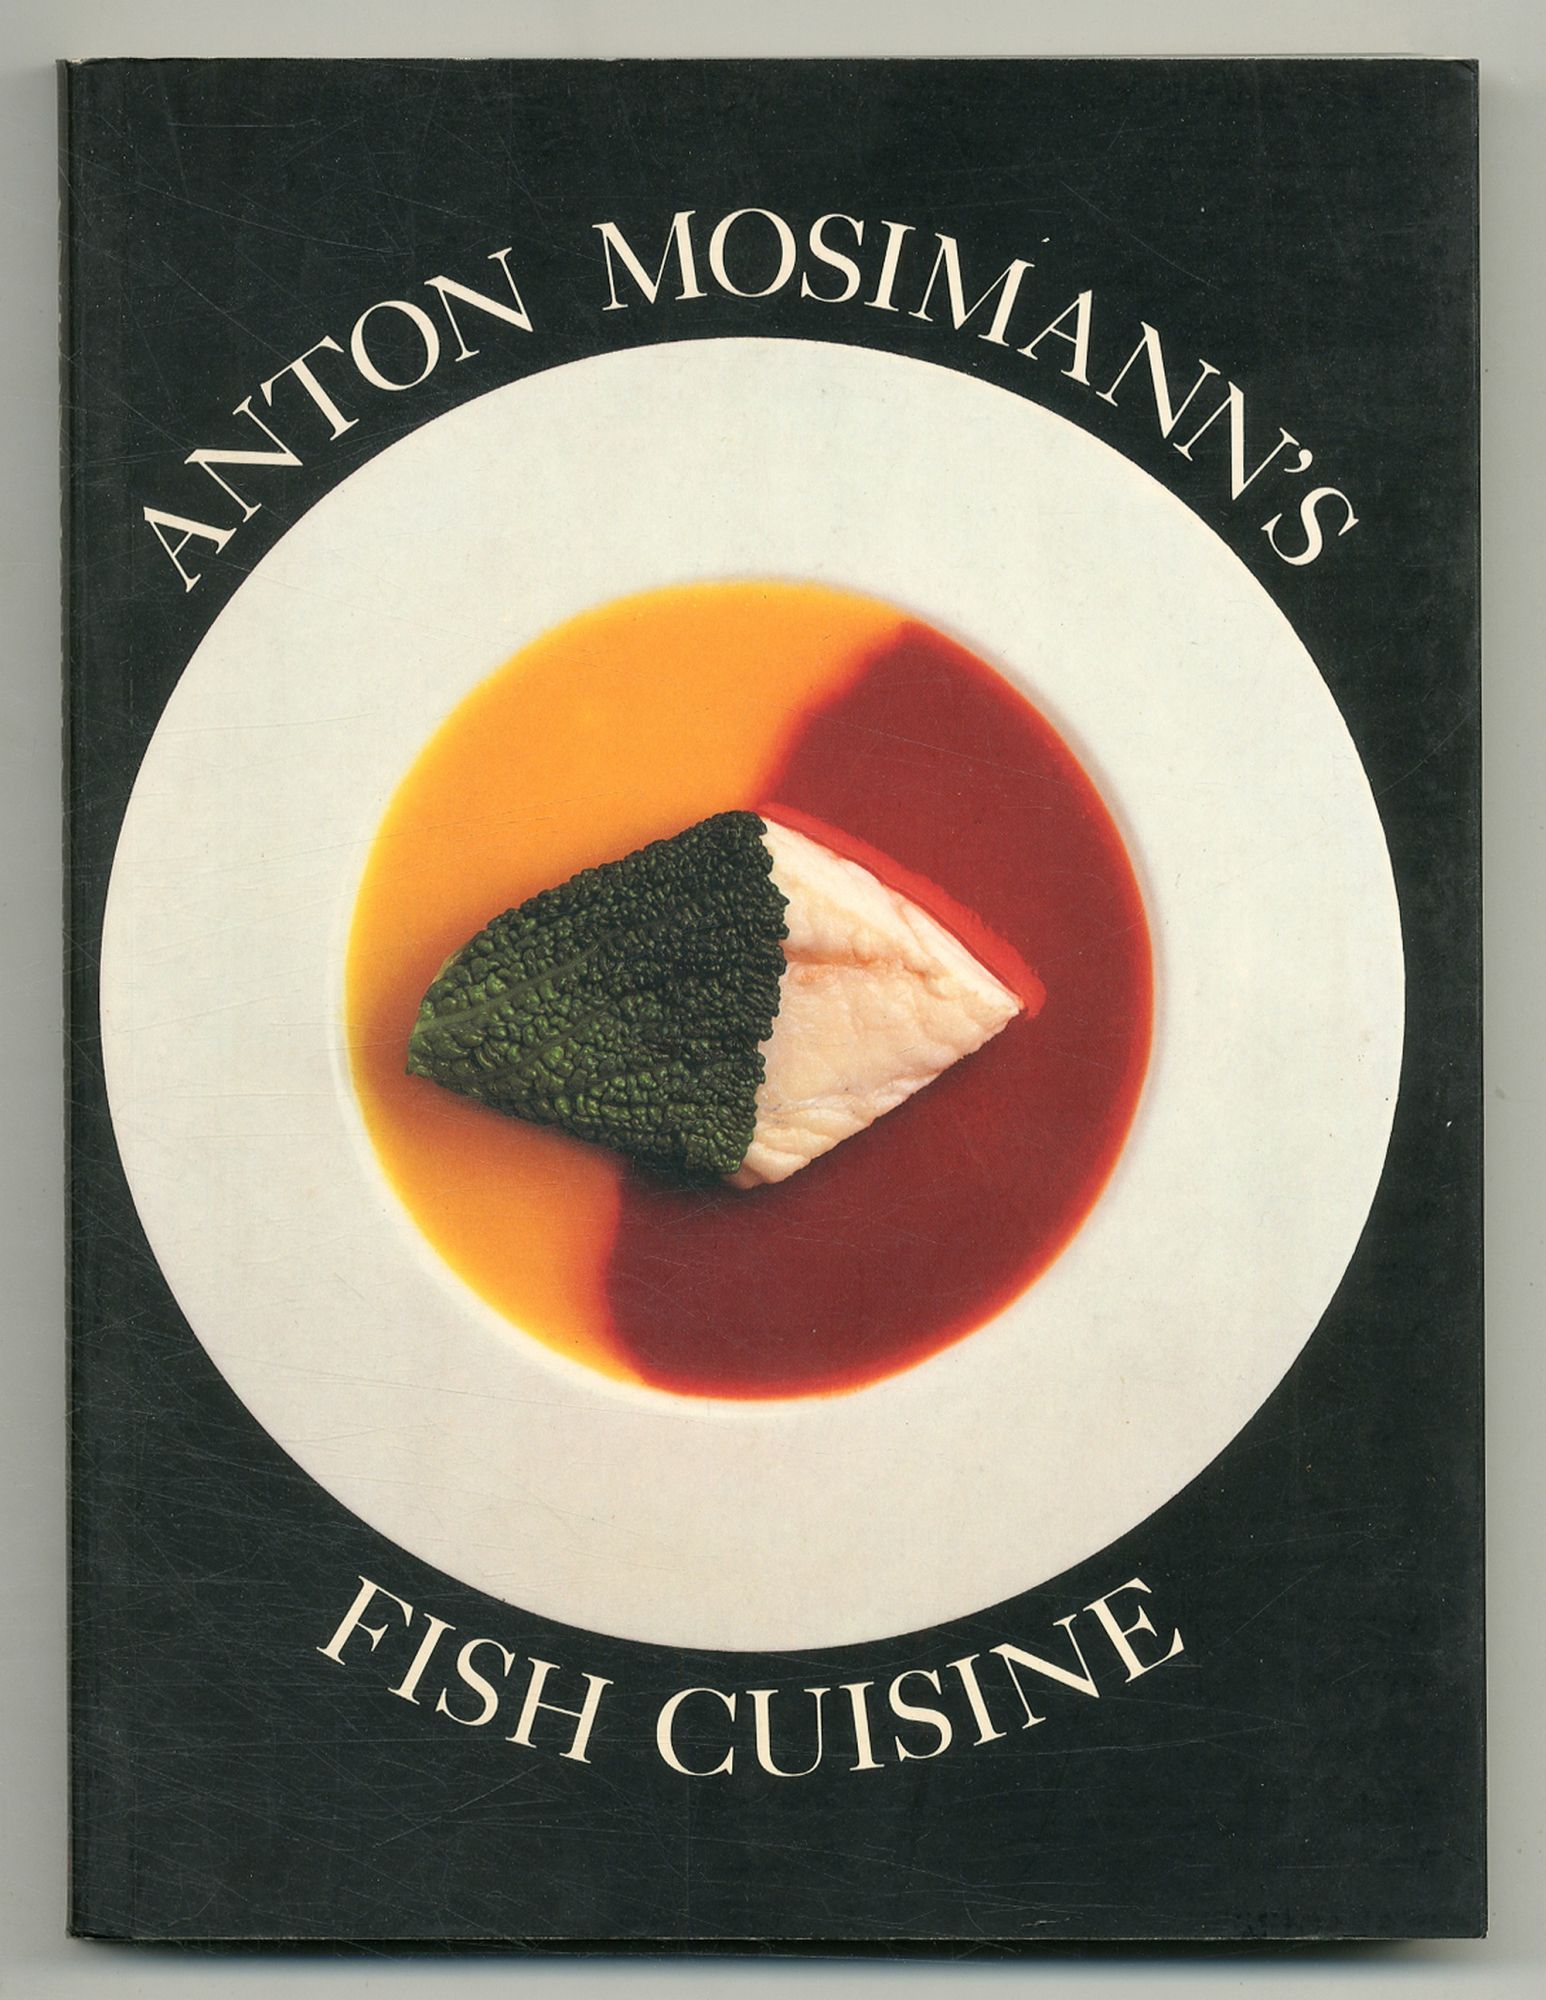 Anton Mosimann's Fish Cuisine - MOSIMANN, Anton